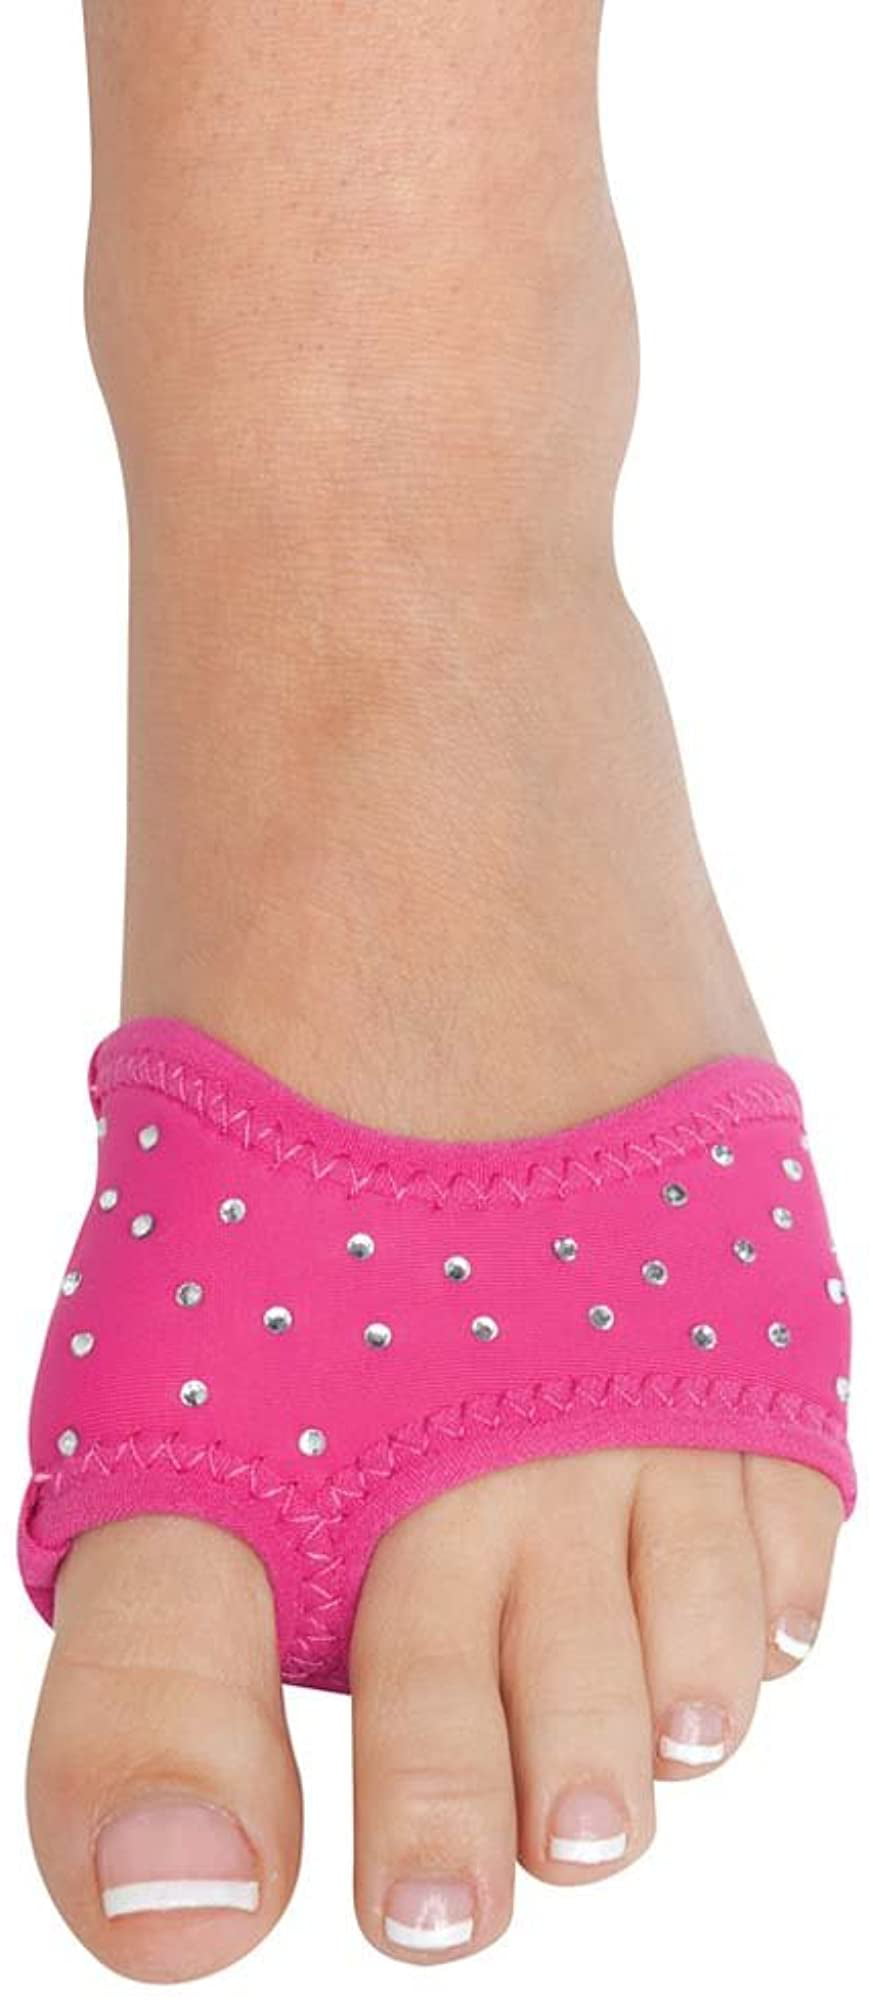 1 Pair Girls/Women Danshuz Pink Zebra Print Neoprene Half Sole Dance Shoes